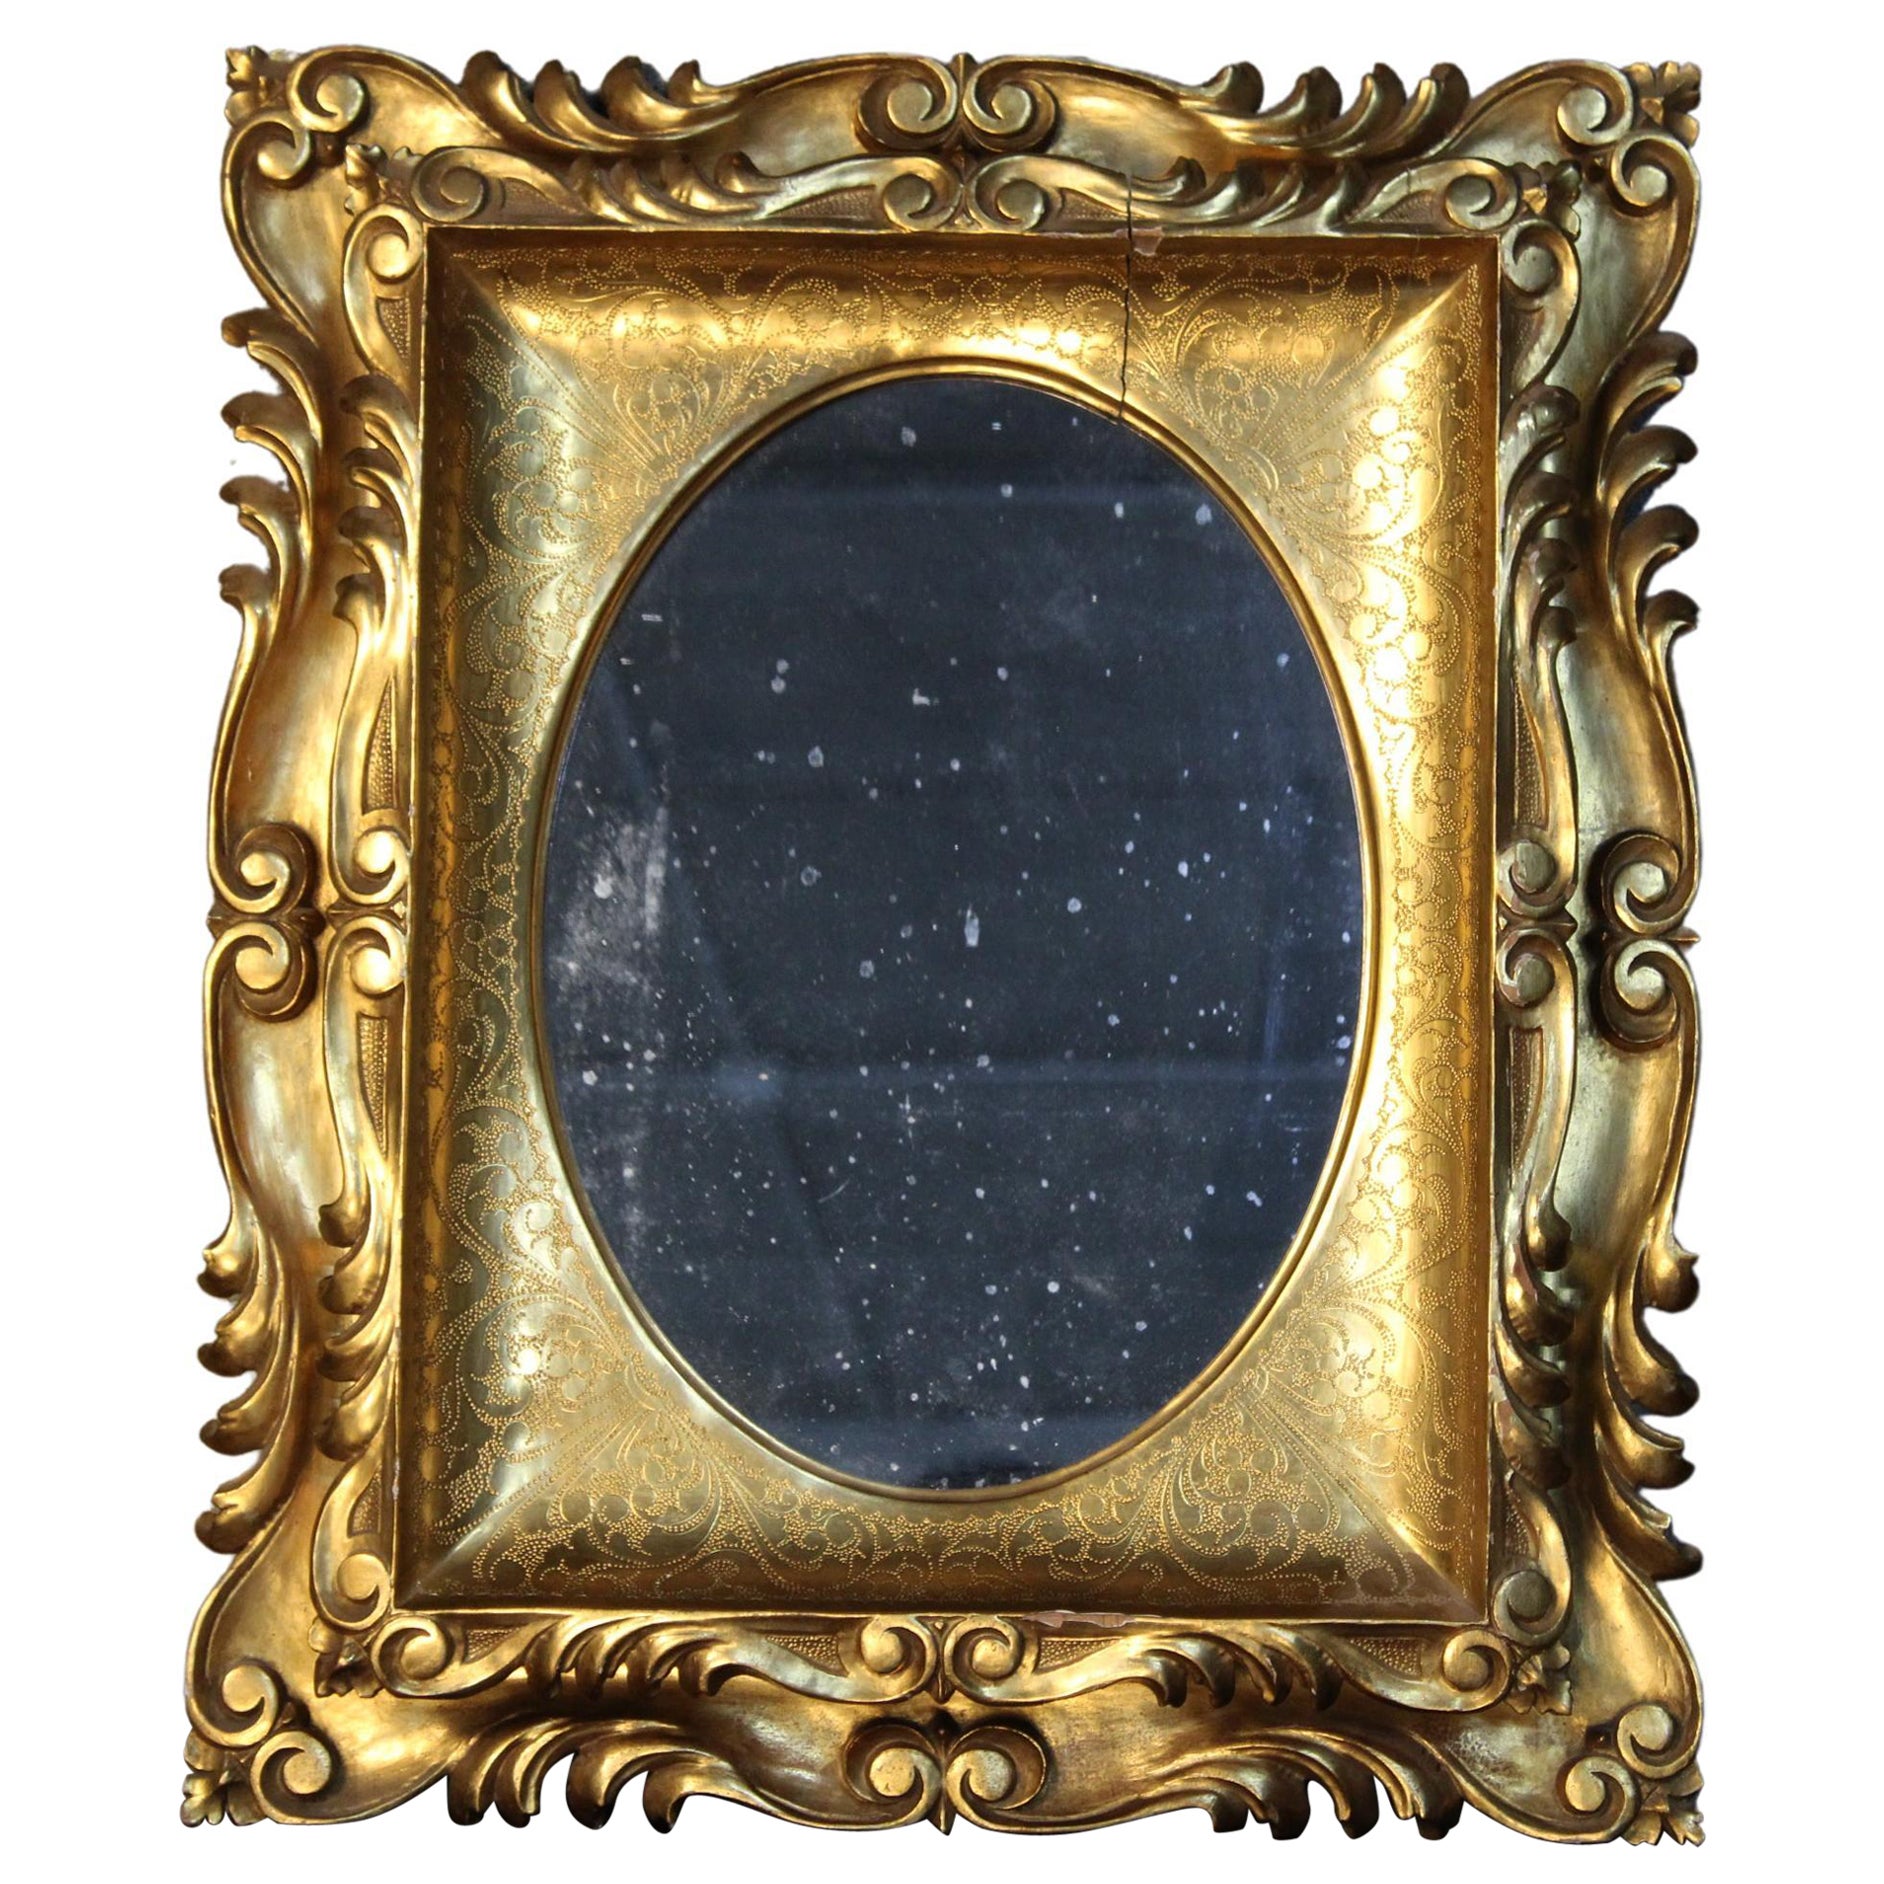 19th century Giltwood Italian Wall Mirror, gilded wall mirror, giltwood mirror